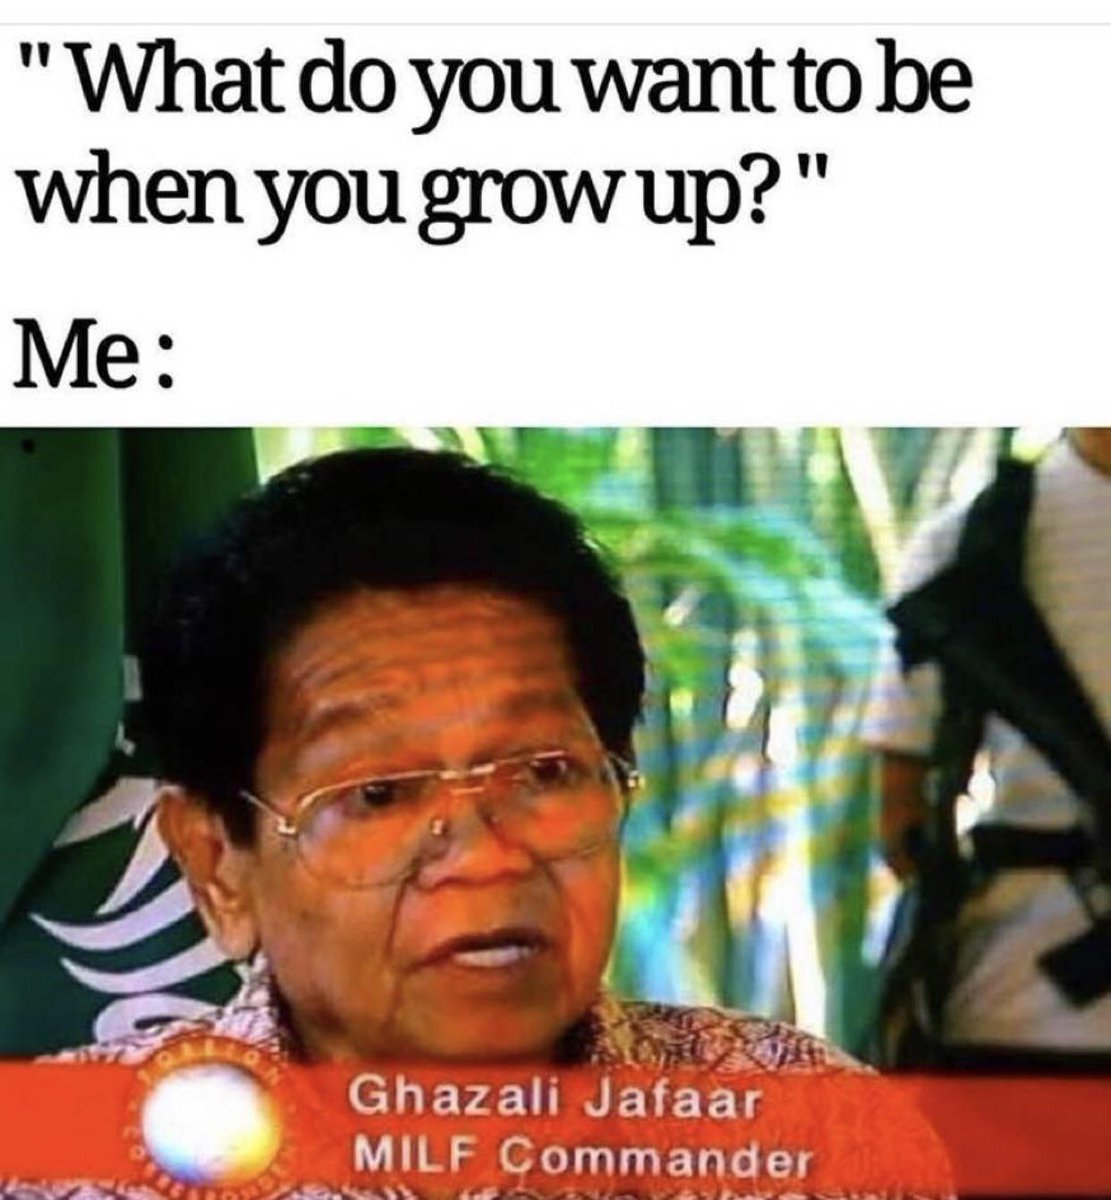 milf commander - What do you want to be when you grow up? Me Ghazali Jafaar Milf Commander